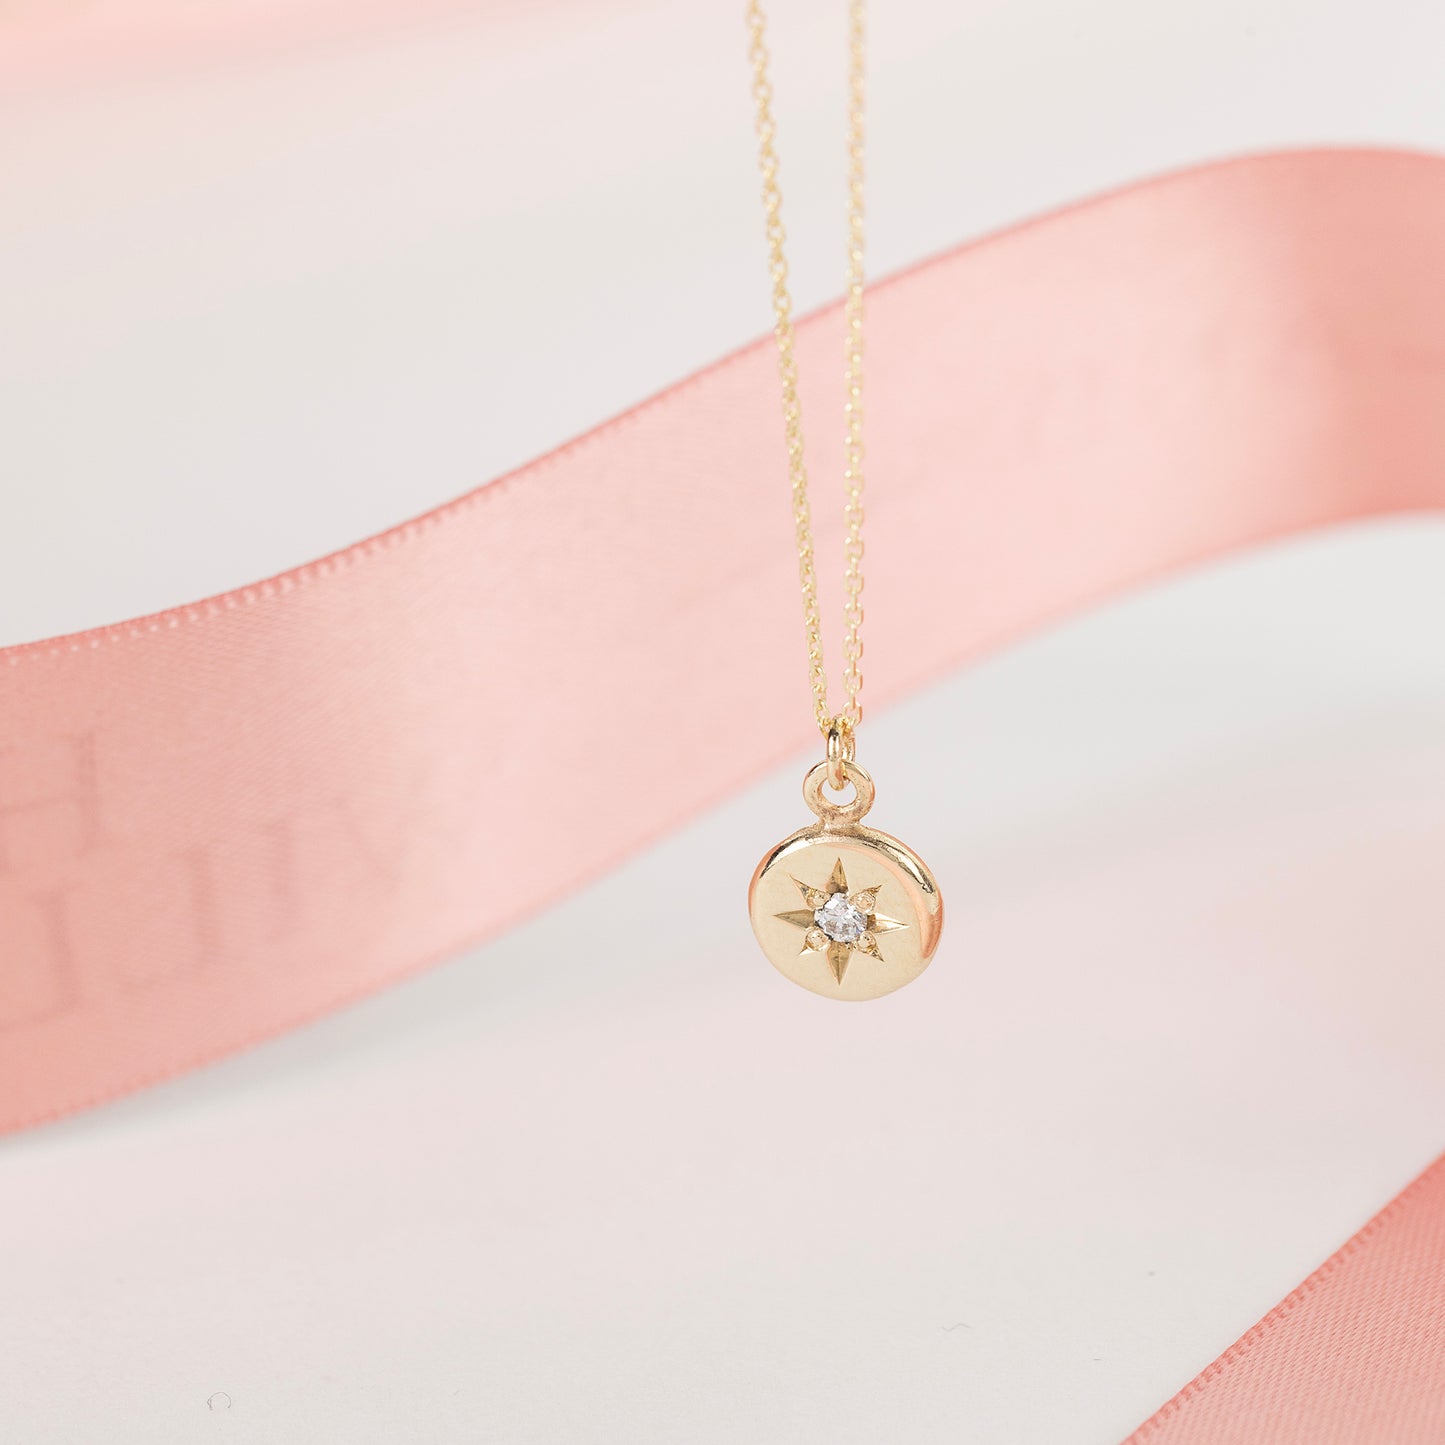 April Birthday Gift - Diamond Star Set Necklace - 9kt Gold